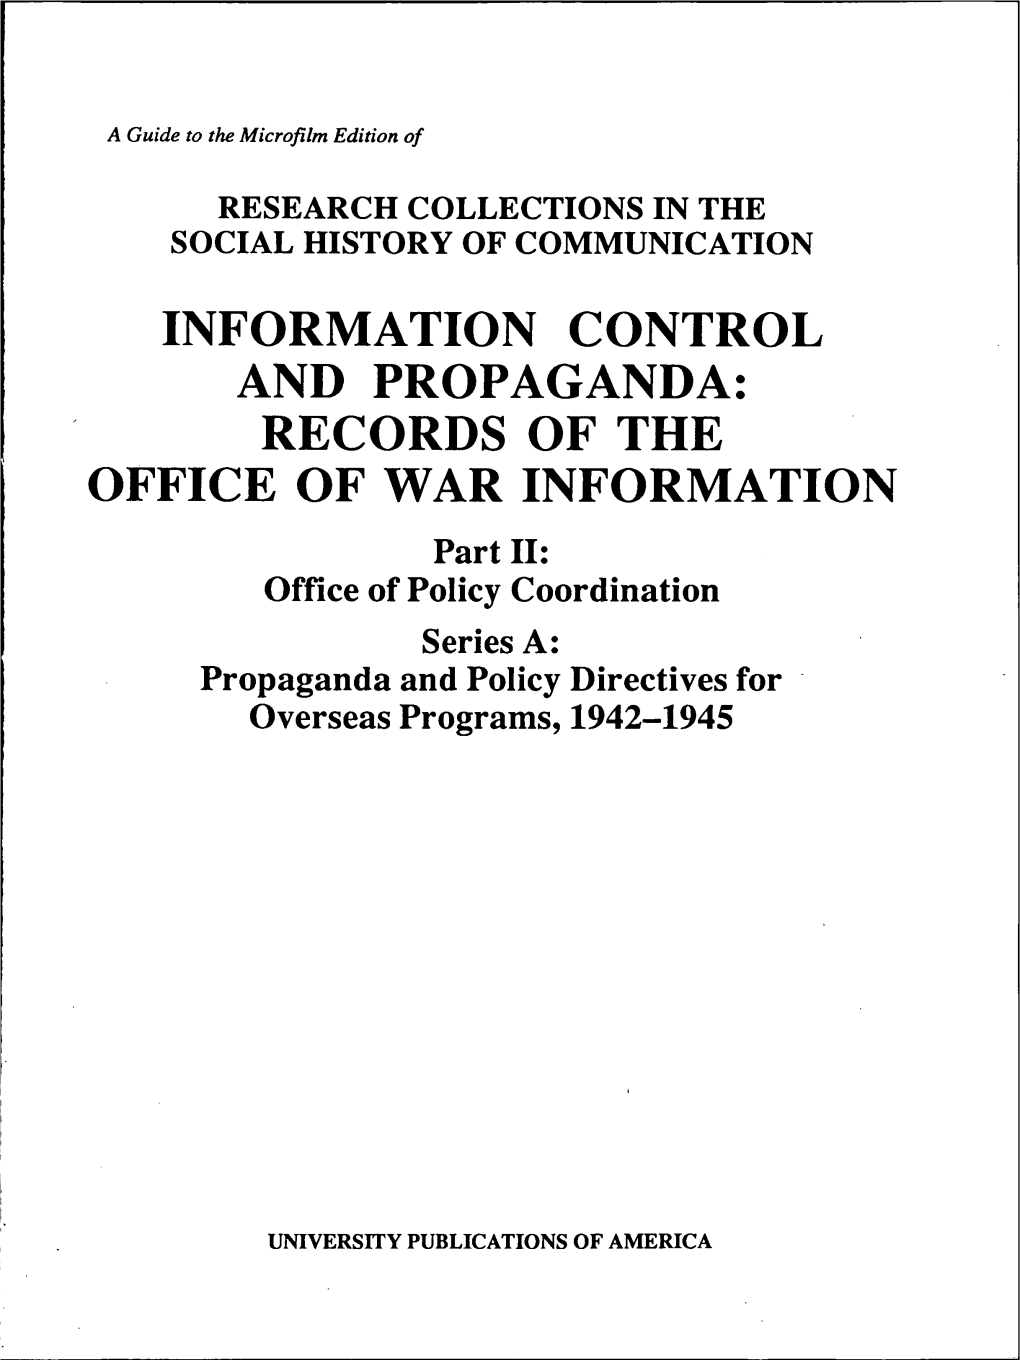 Information Control and Propaganda